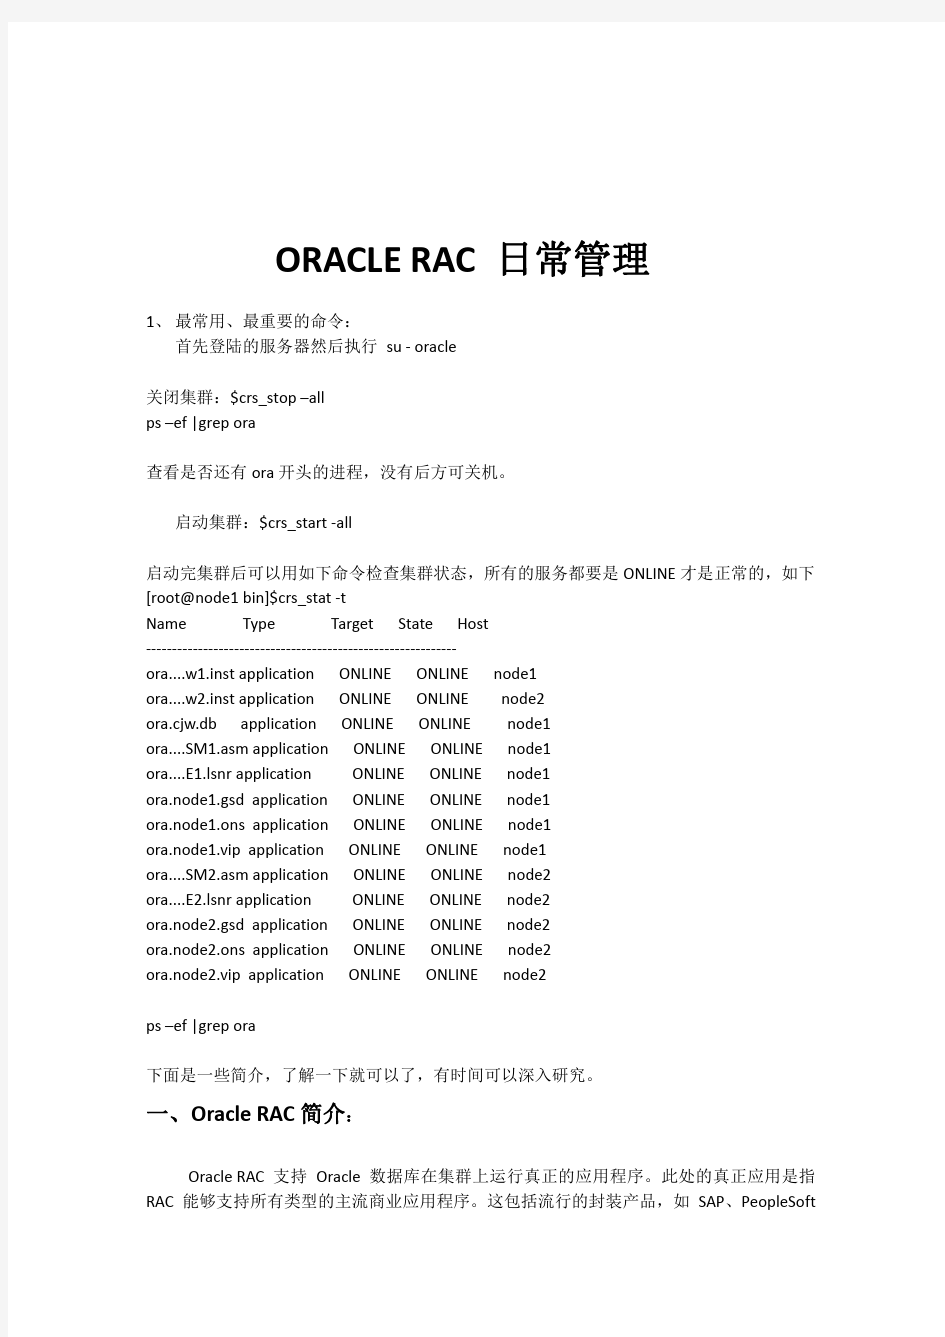 ORACLE RAC日常管理和维护